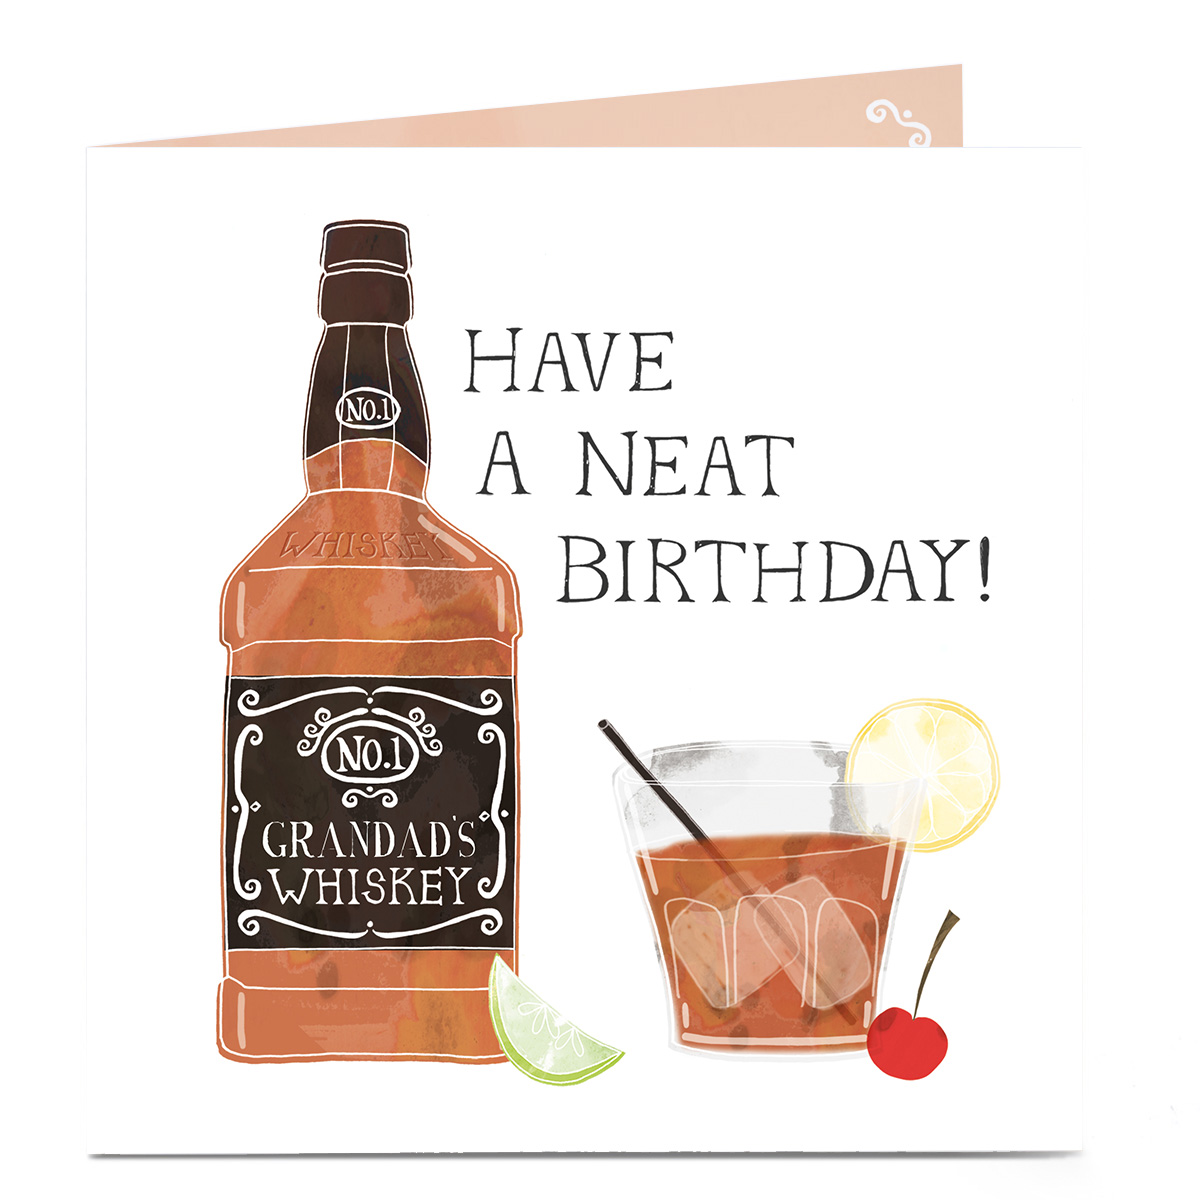 Personalised Birthday Card - Neat Whiskey [Grandad]